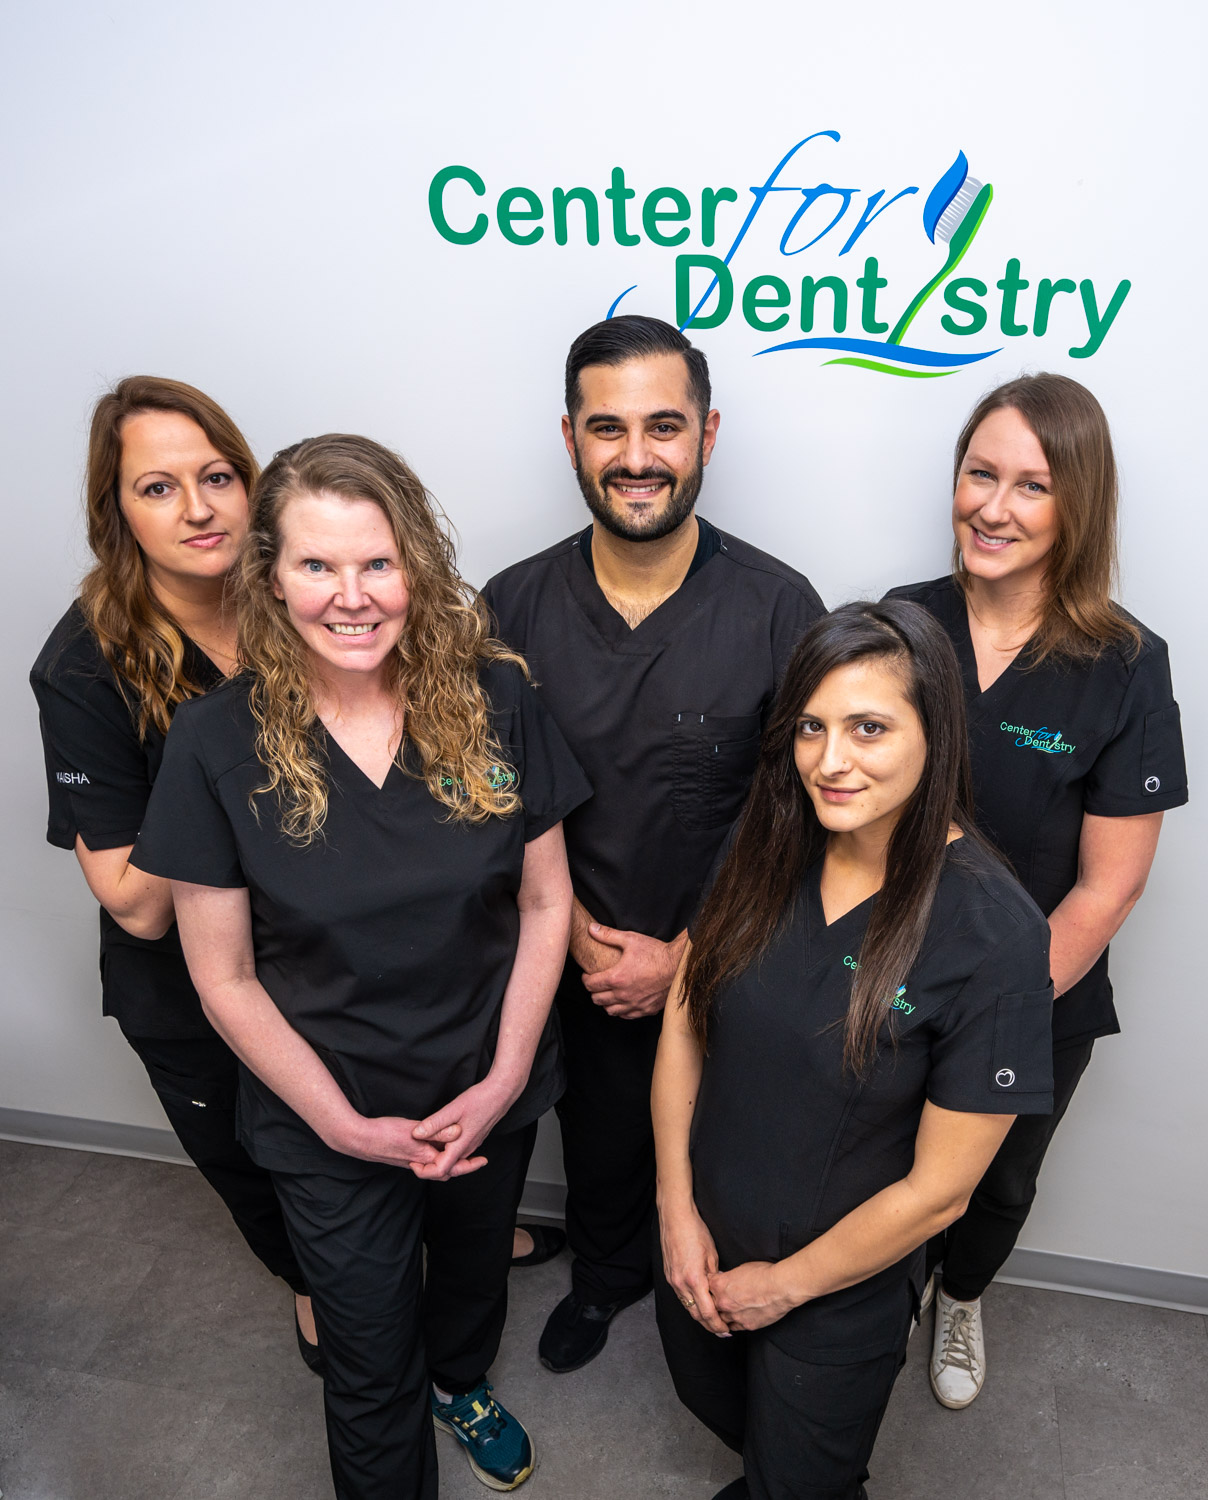 Okanagan Falls Center for Dentistry is still welcoming new patients